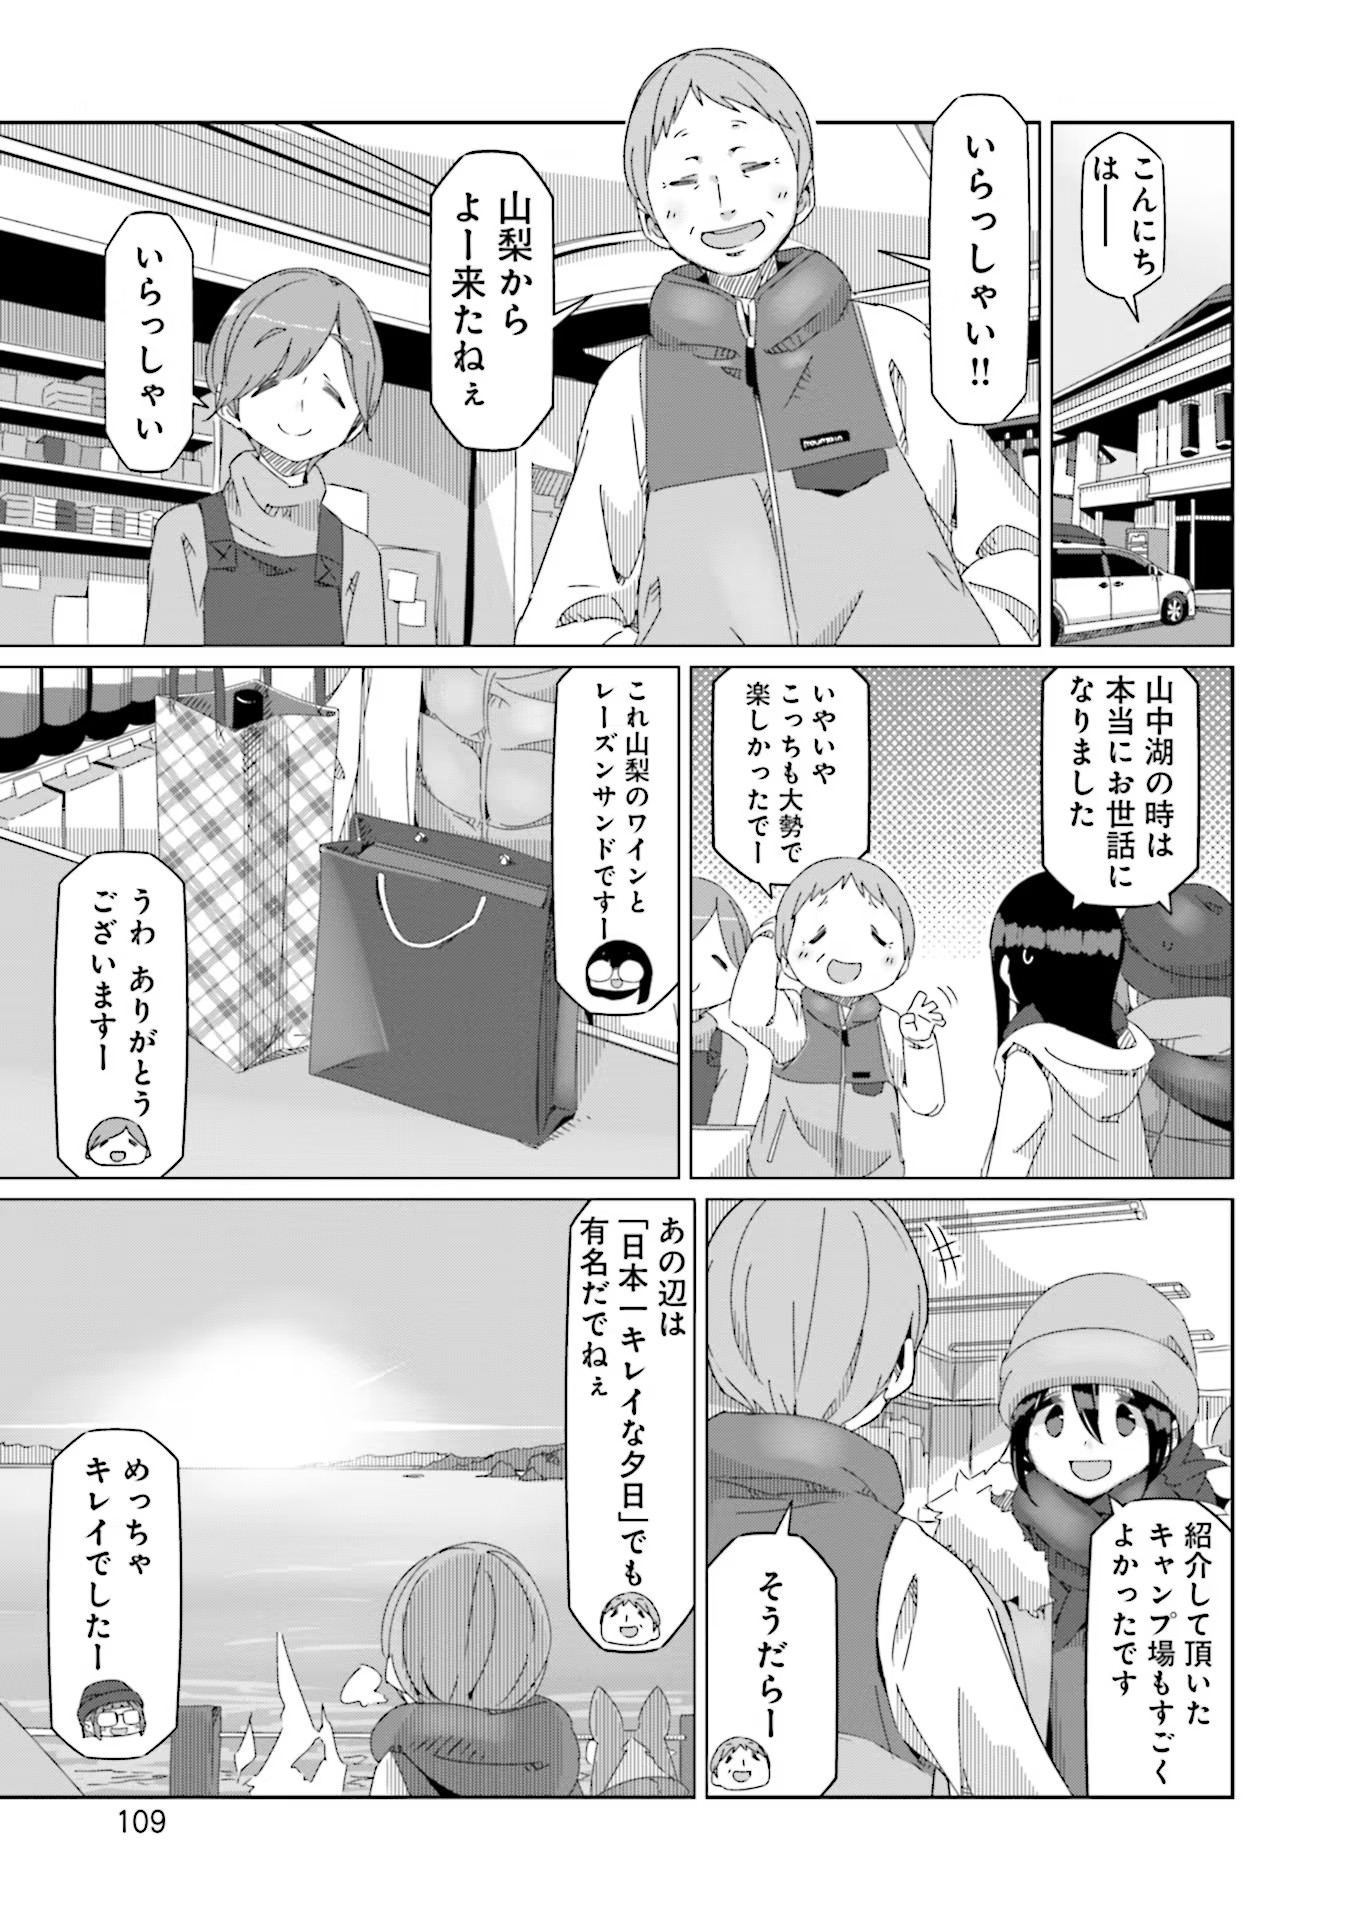 Yuru Camp - Chapter 51 - Page 3